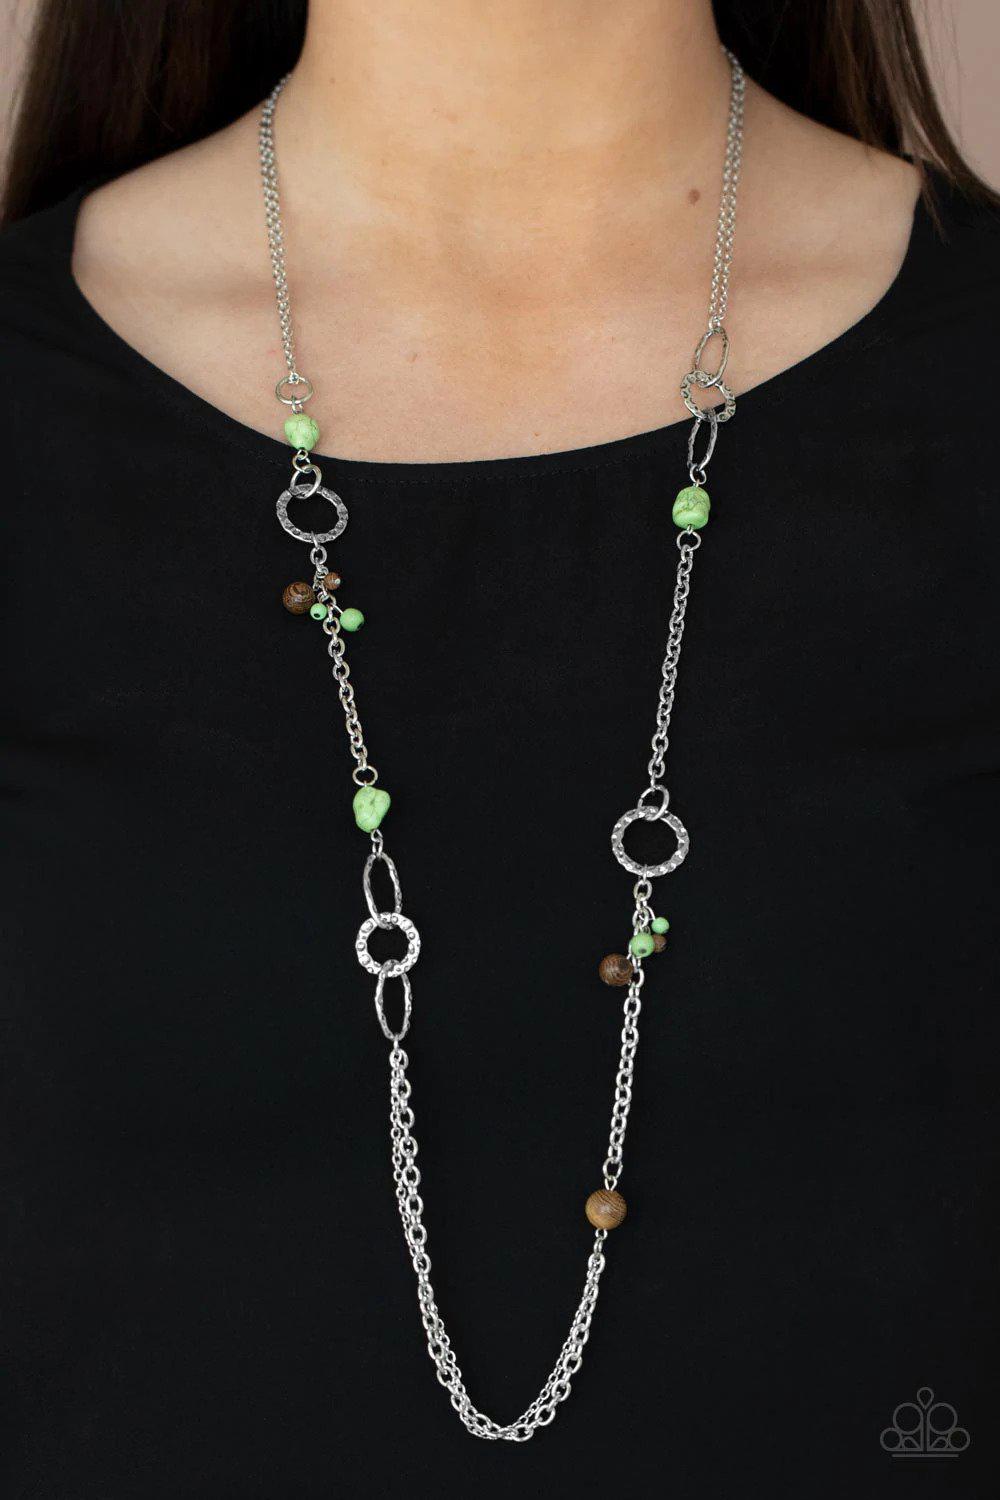 Sandstone Safari Green Necklace - Paparazzi Accessories- lightbox - CarasShop.com - $5 Jewelry by Cara Jewels